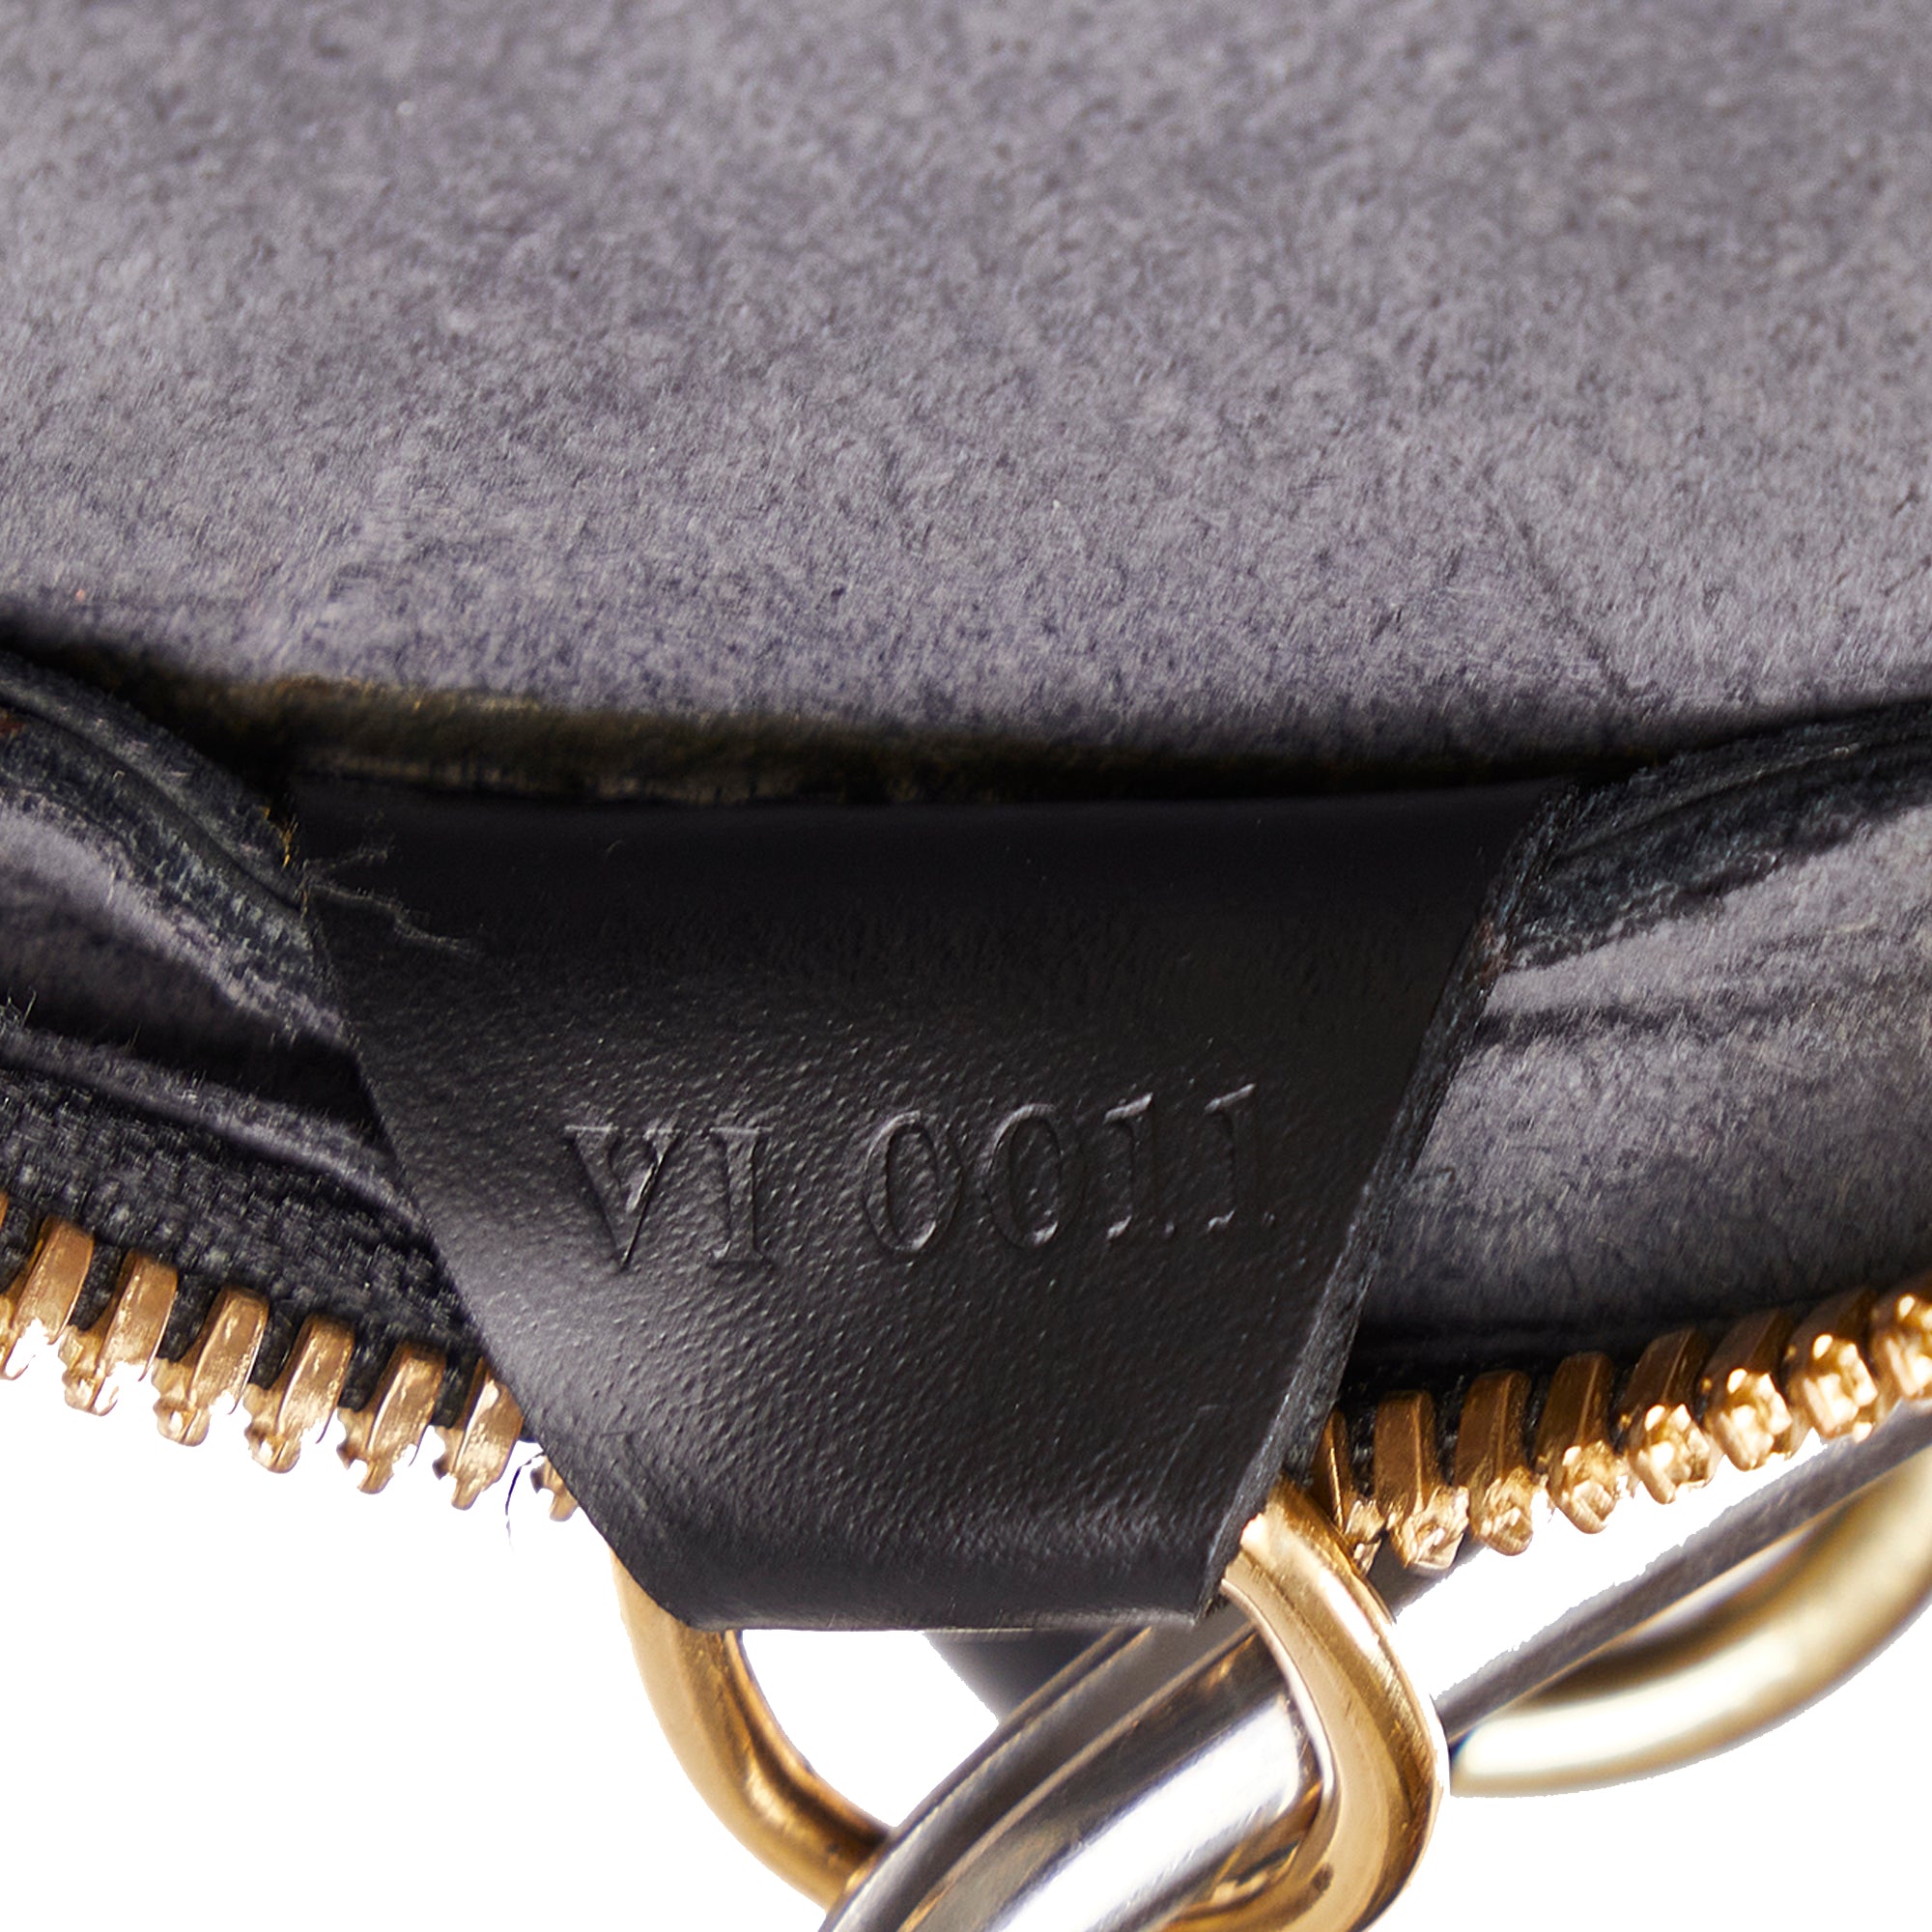 Louis Vuitton Mabillon Detailed Review 